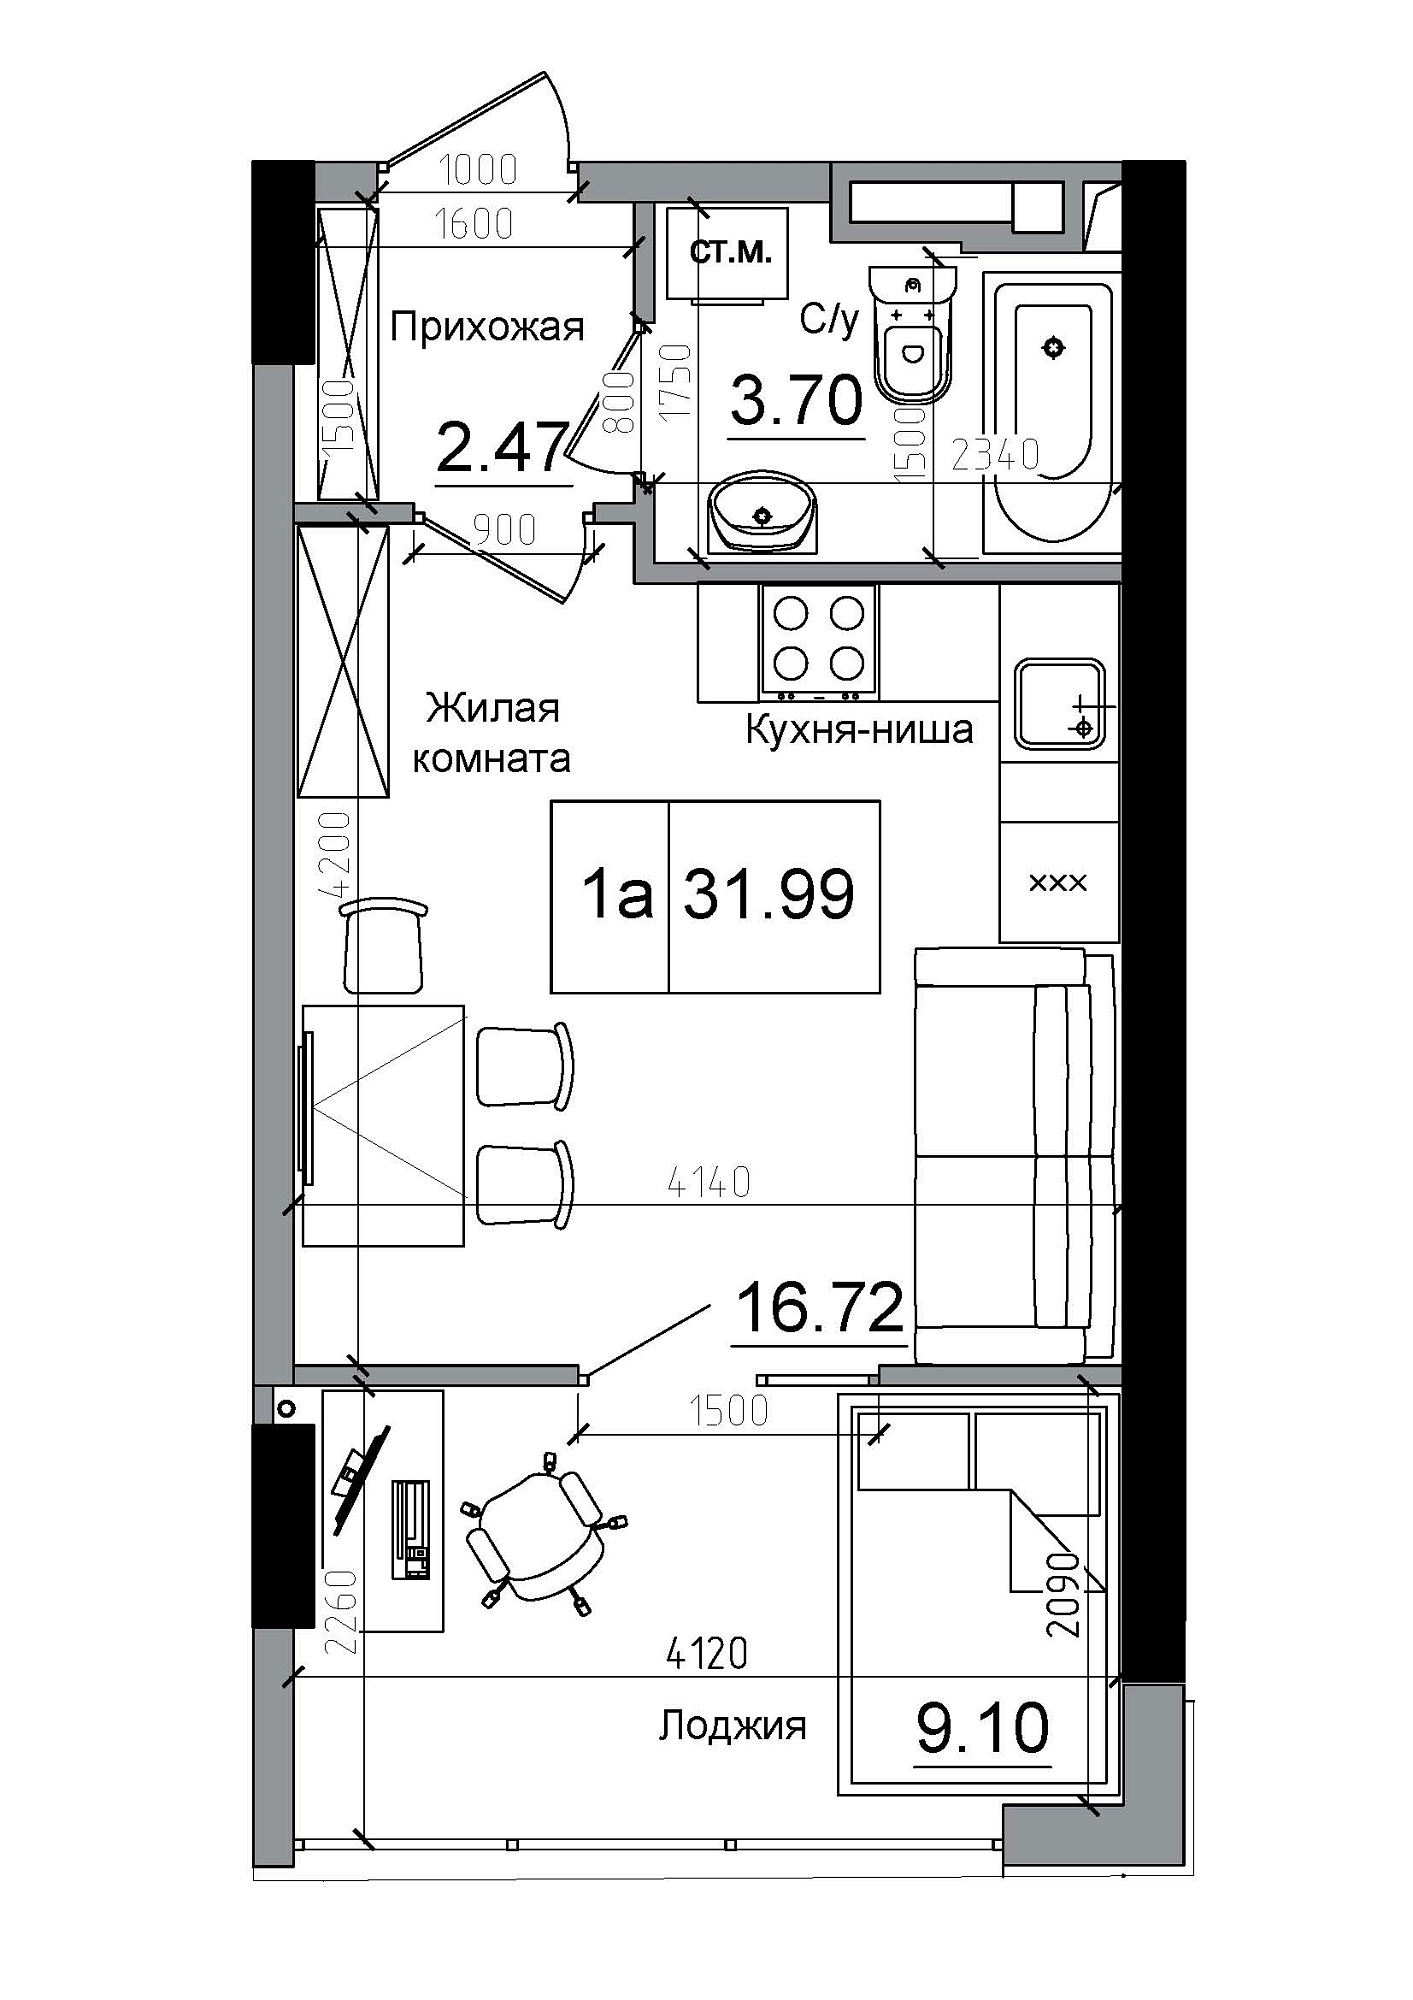 Planning Smart flats area 31.99m2, AB-12-01/00001.